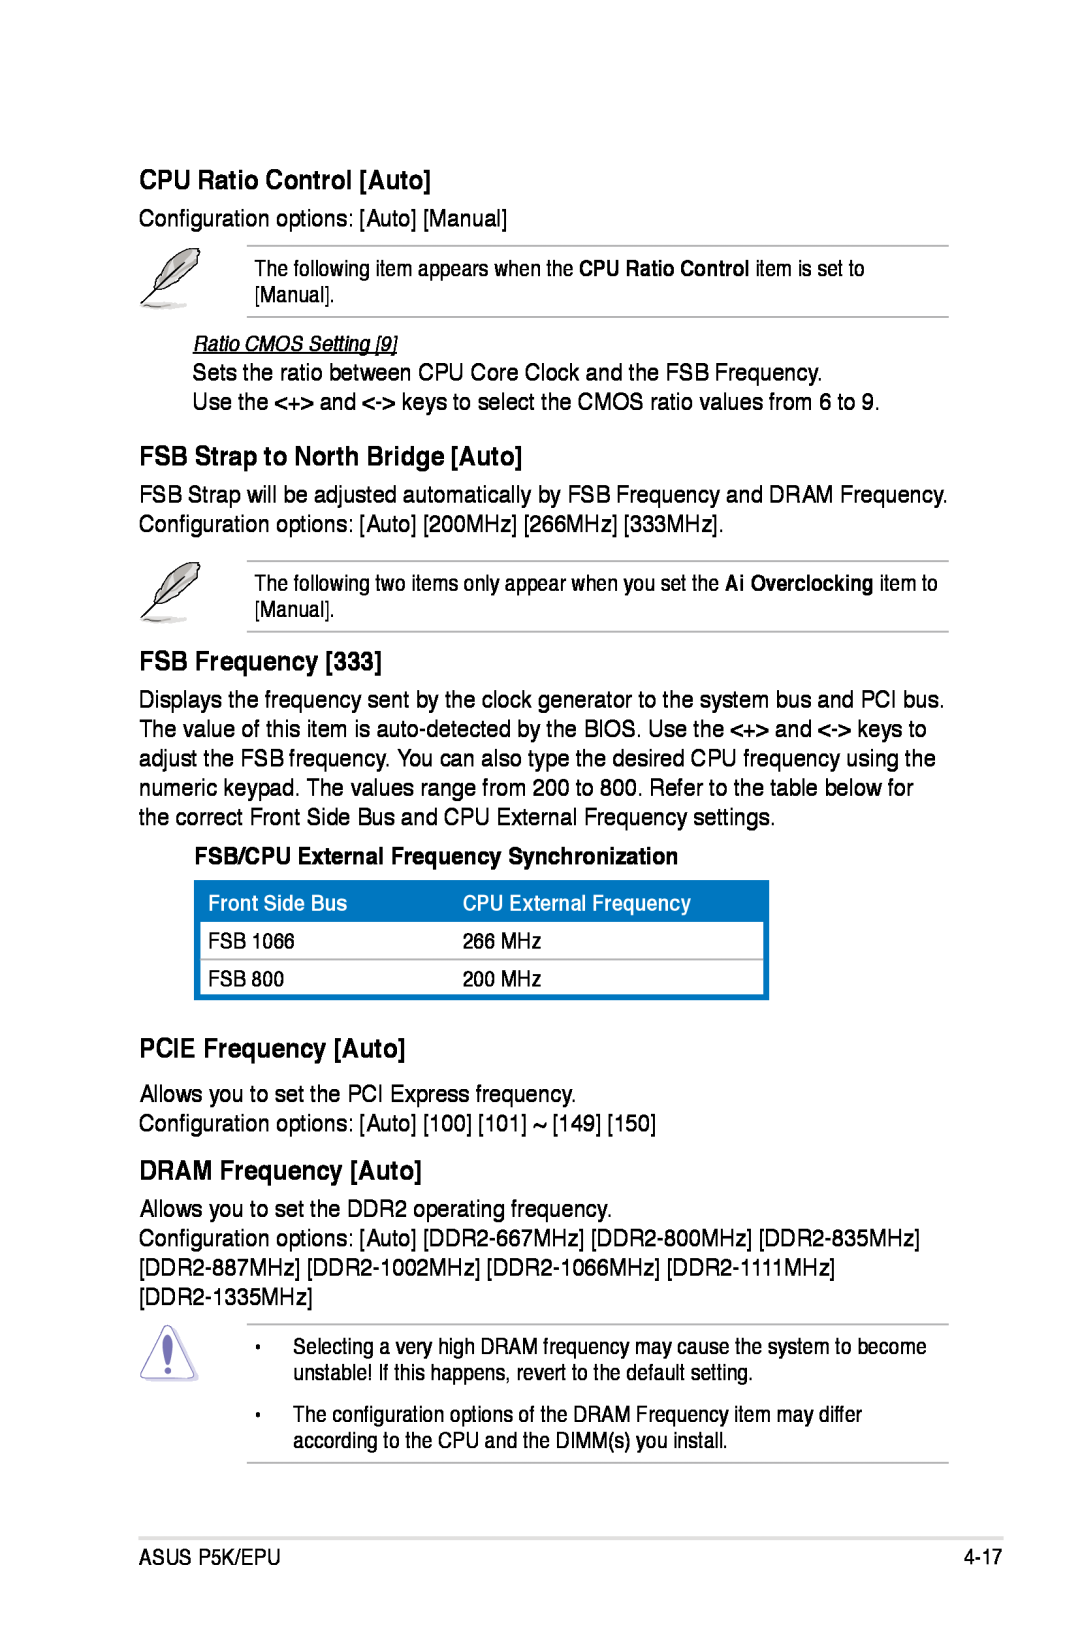 Asus P5K/EPU manual CPU Ratio Control Auto, FSB Strap to North Bridge Auto, FSB Frequency, PCIE Frequency Auto 